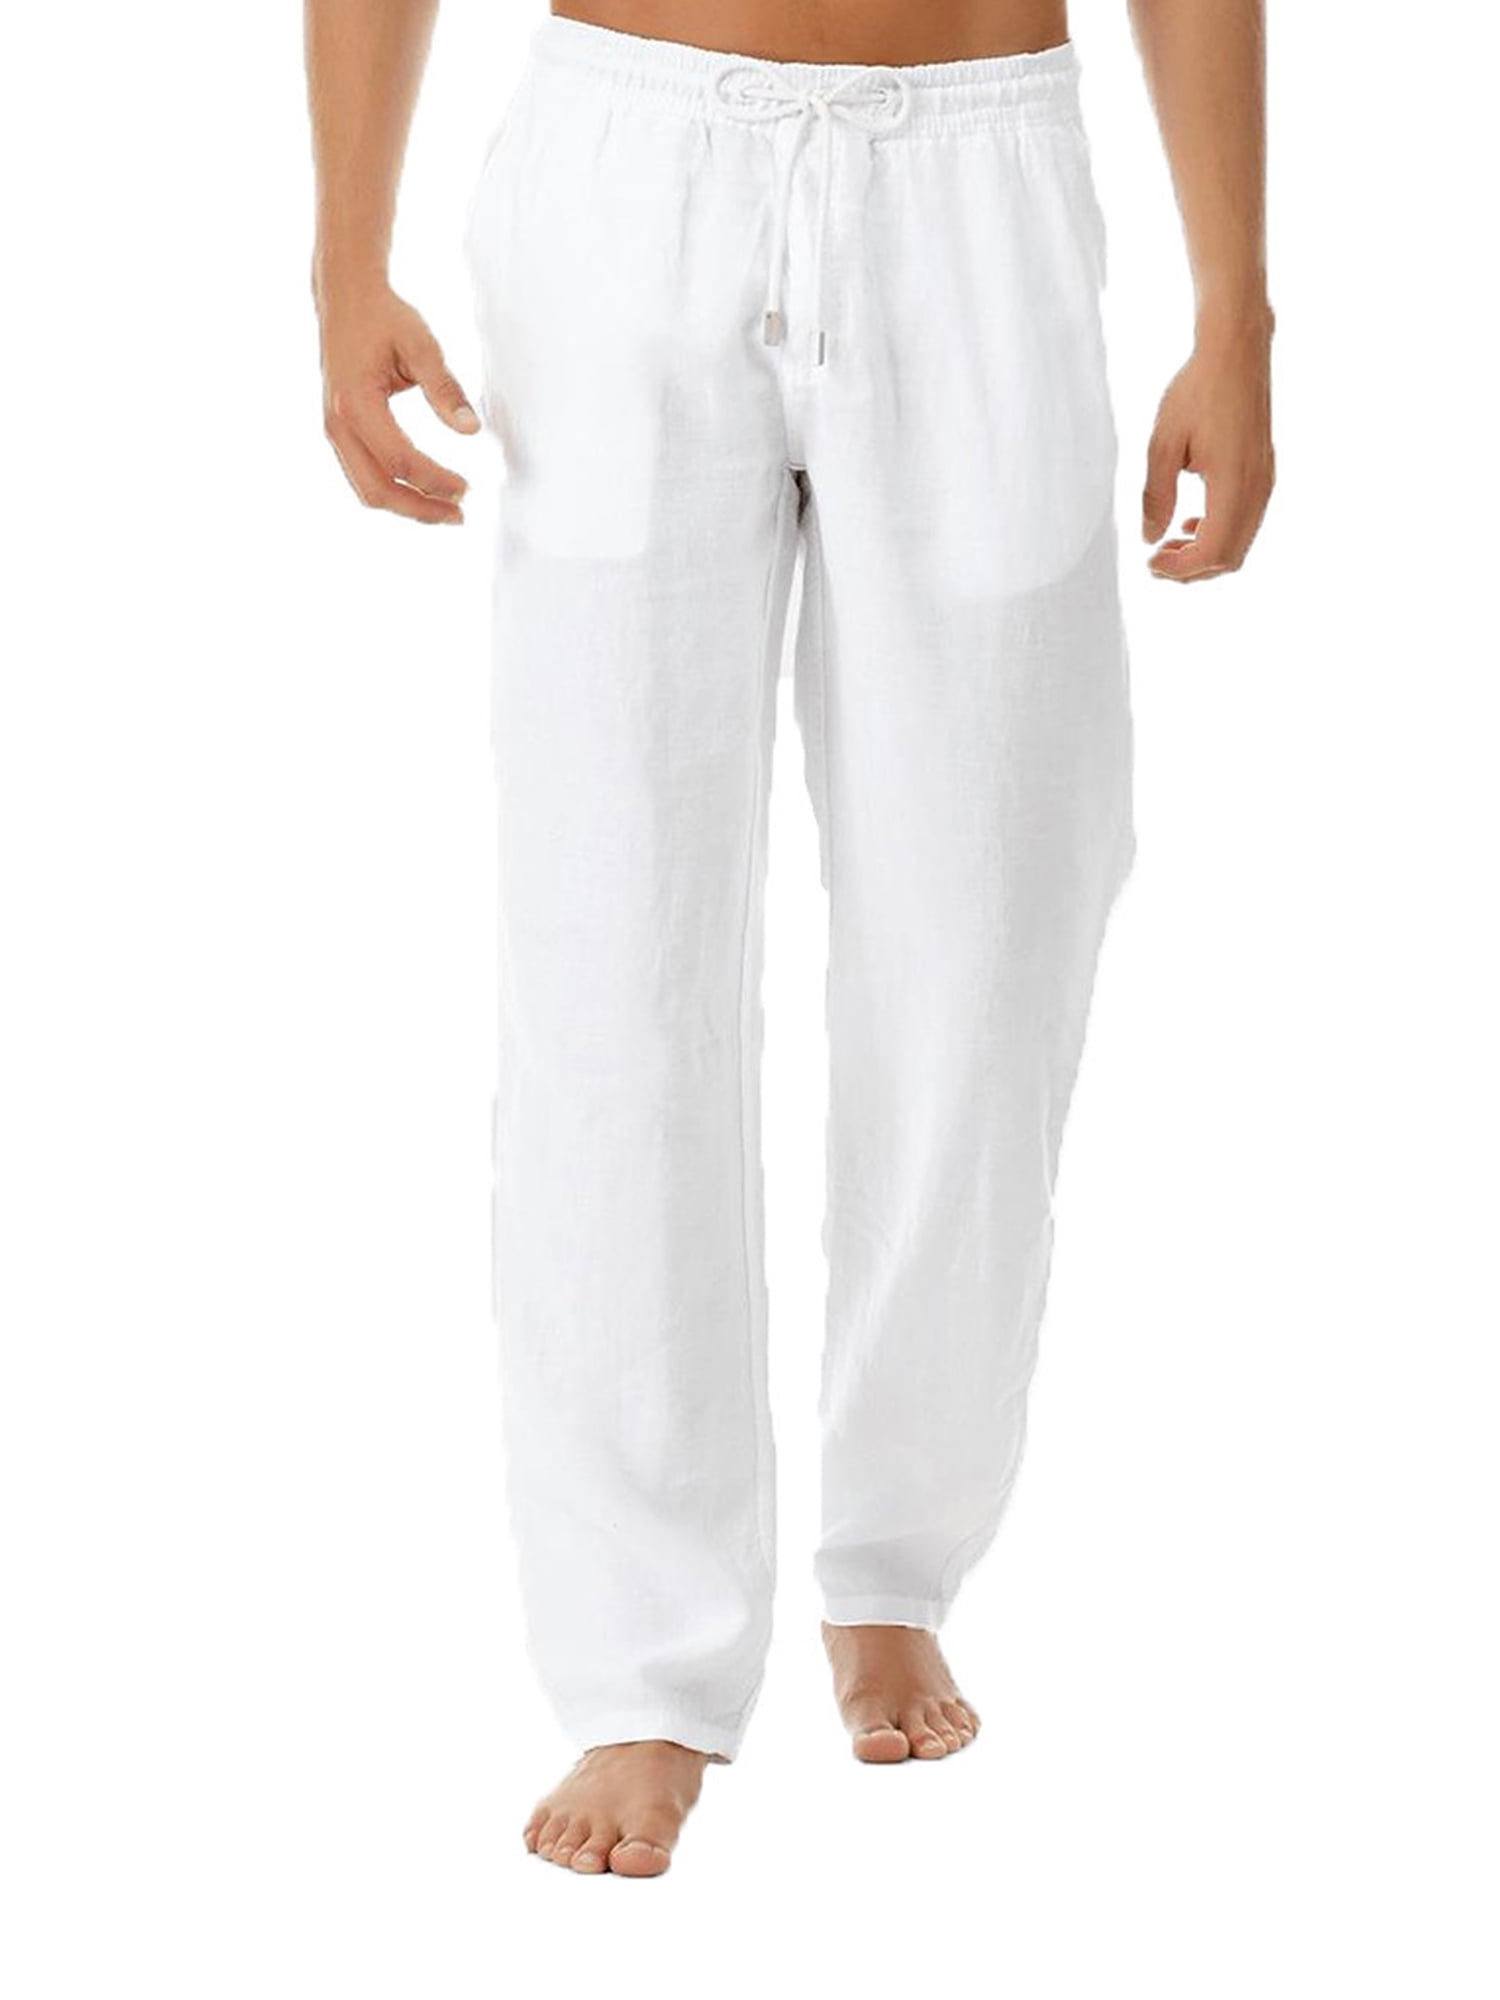 Mens Linen Cotton Pants Casual Elastic Waist Drawstring Straight Leg Beach Long Pant with Pockets 